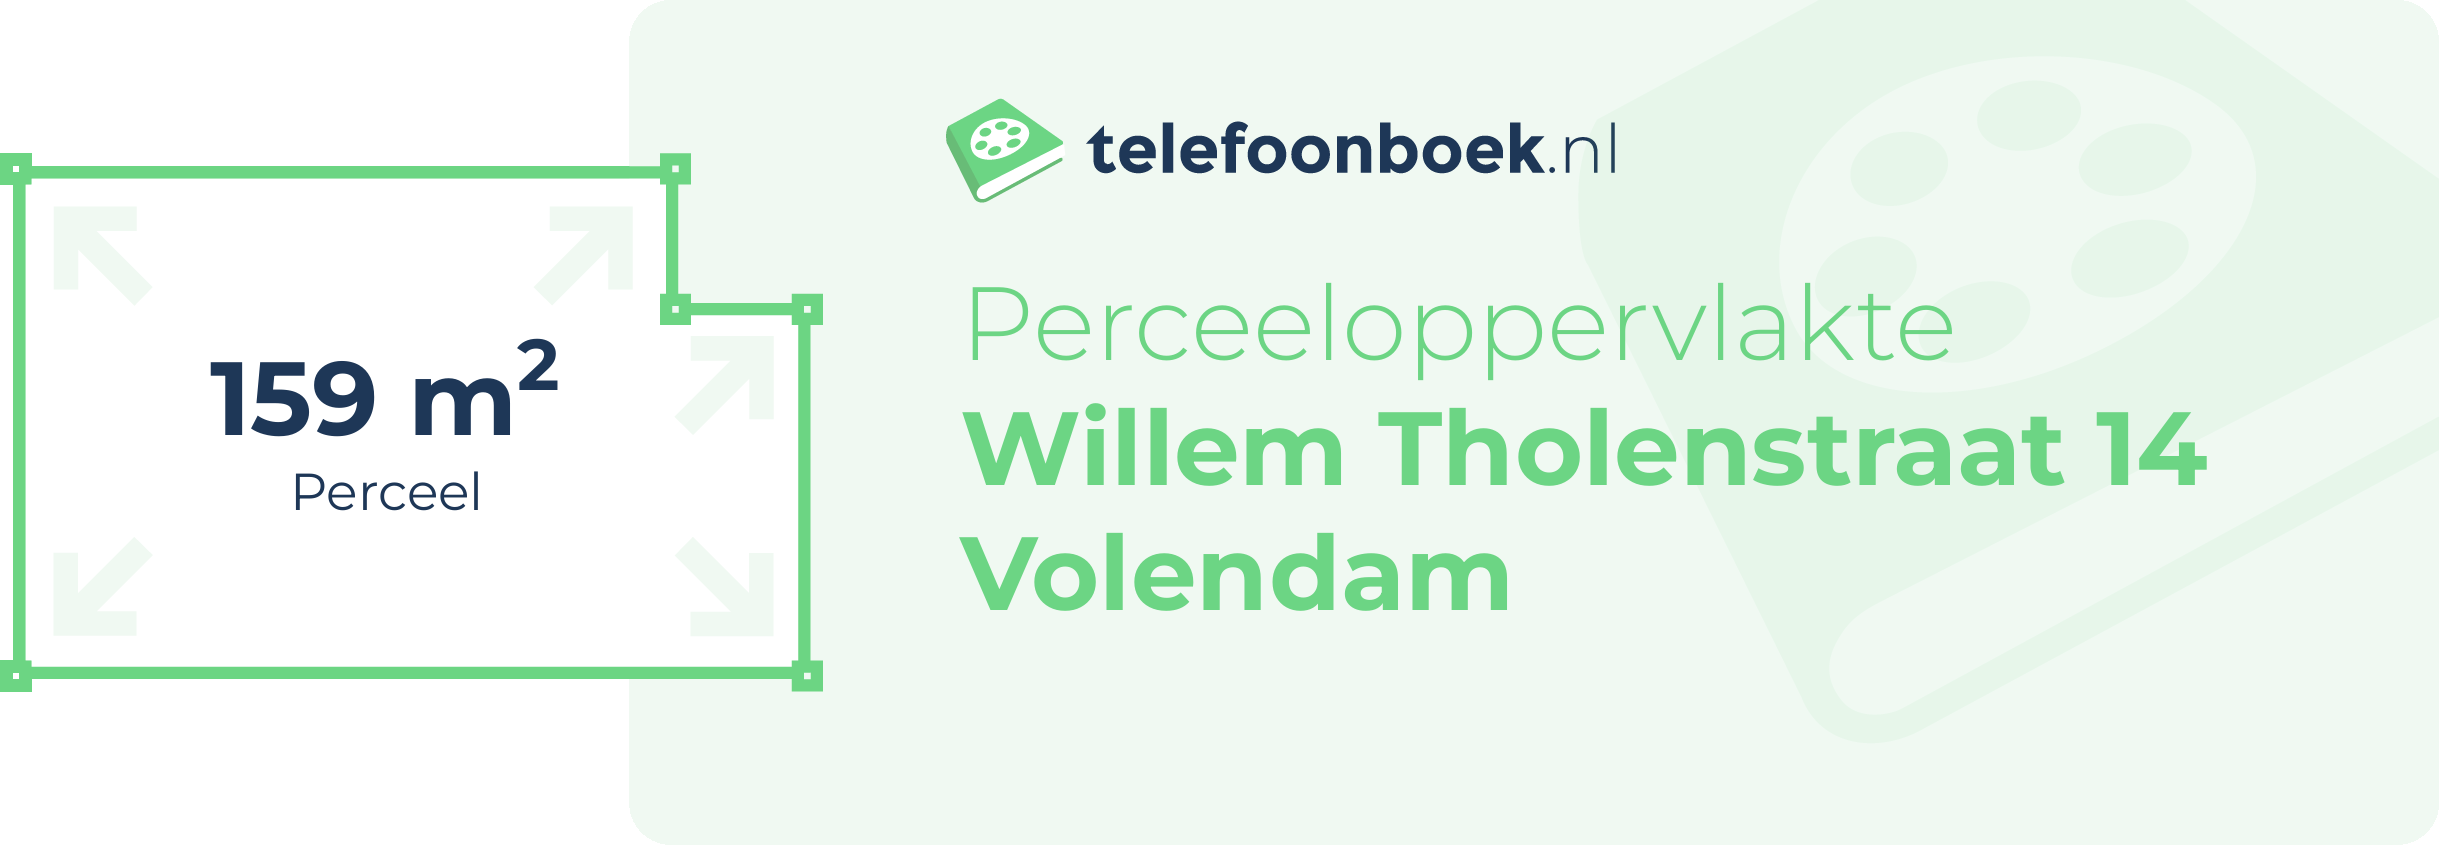 Perceeloppervlakte Willem Tholenstraat 14 Volendam